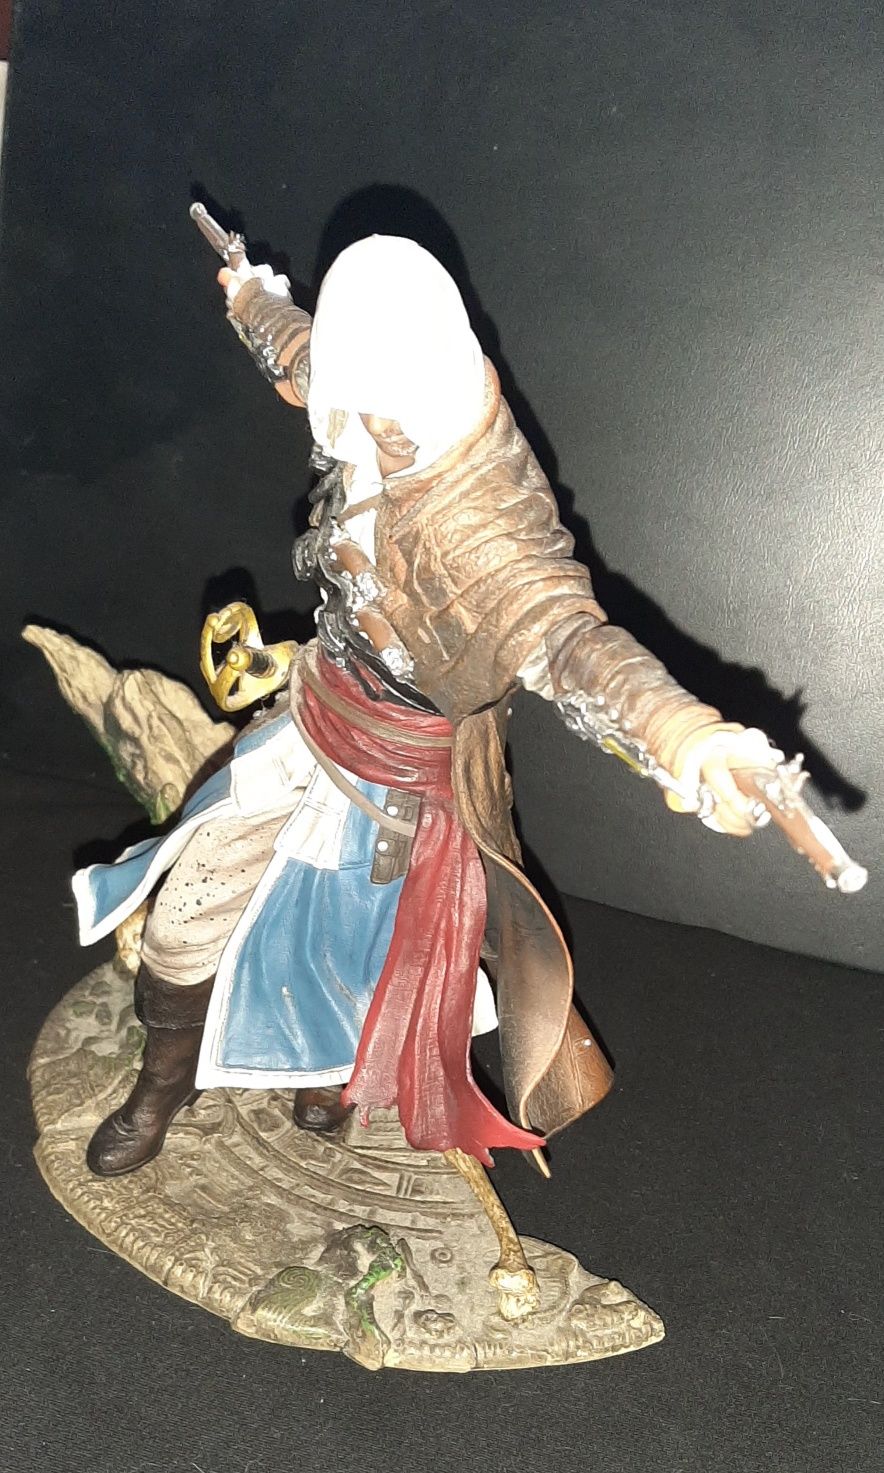 Vendo Estátua/Figura
Assassin's Creed IV: Black Flag (Edward Kenway)